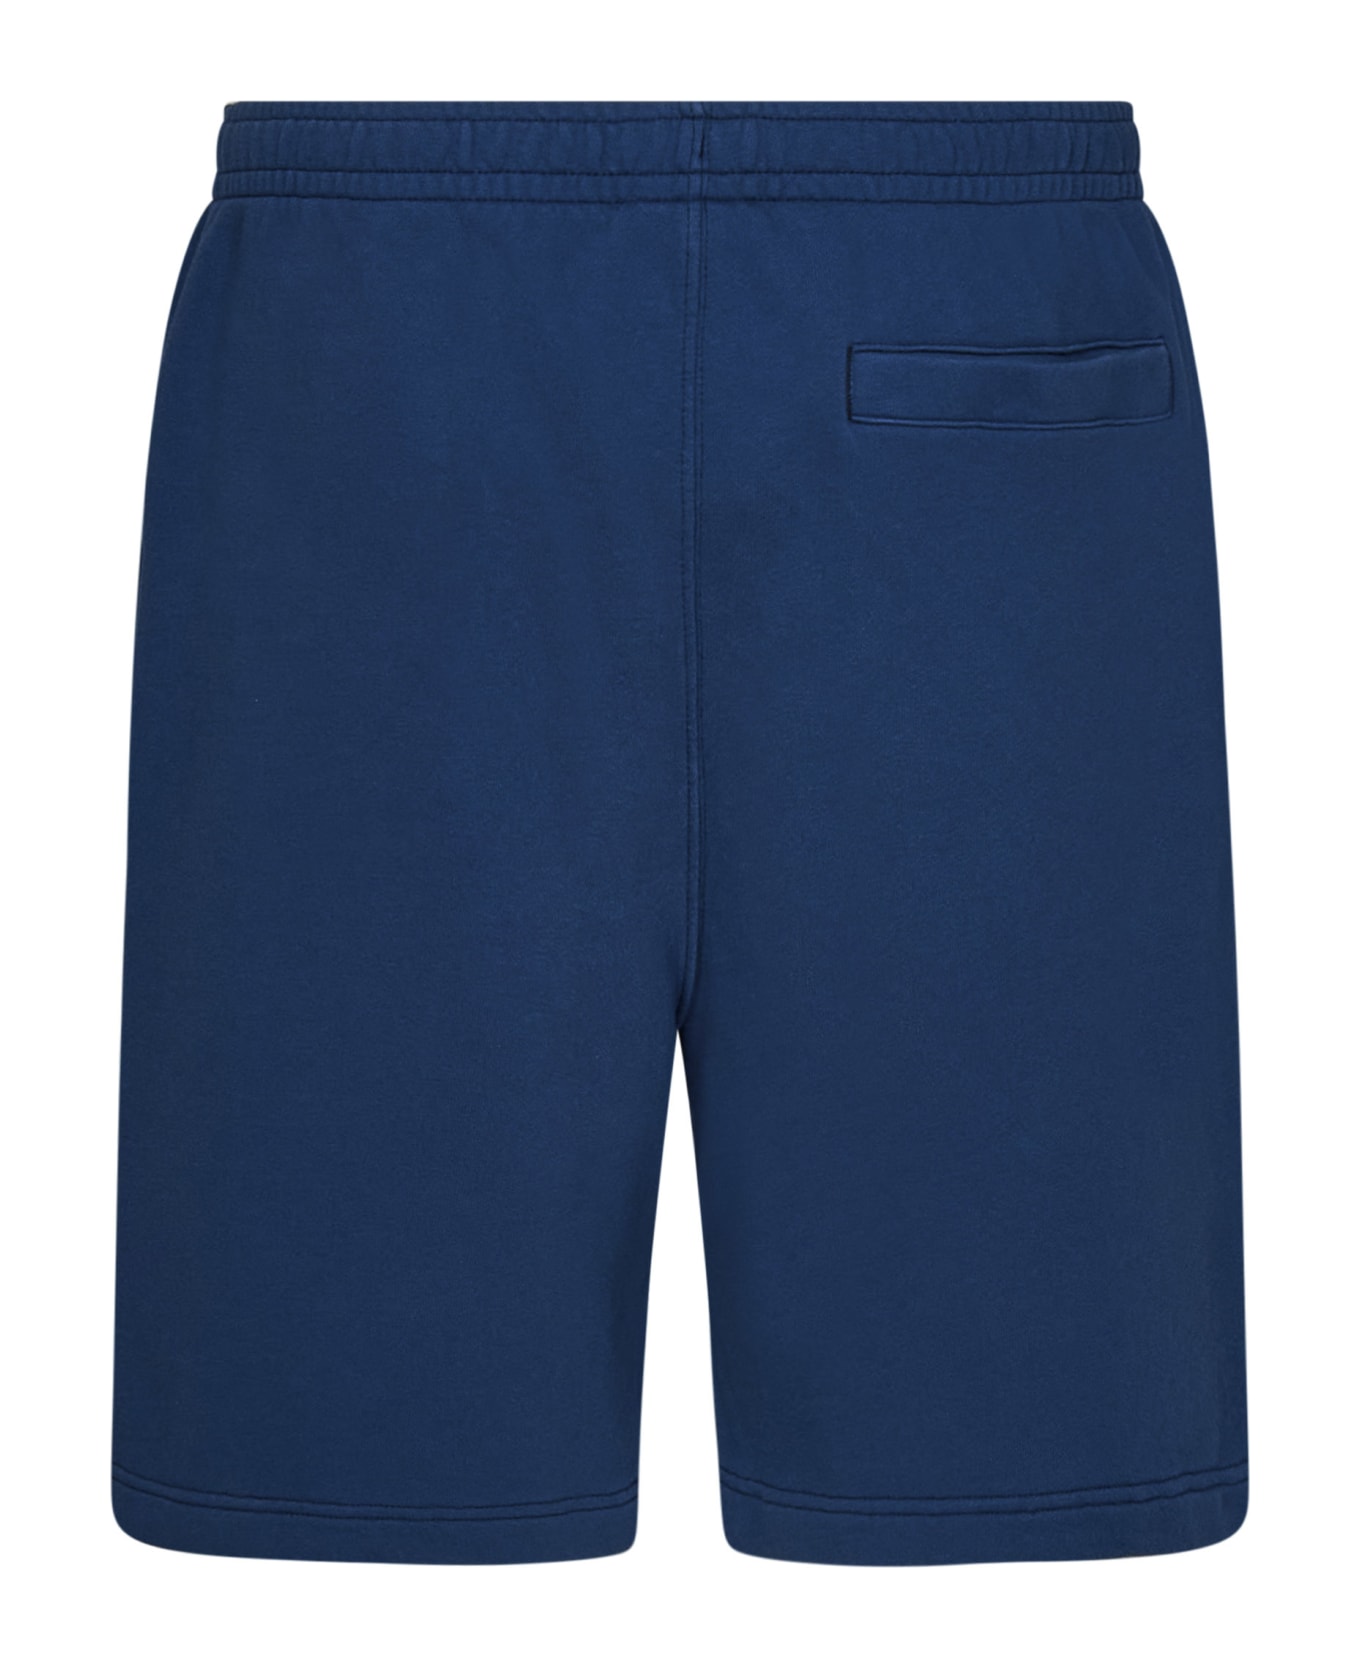 Lacoste Shorts - Blue